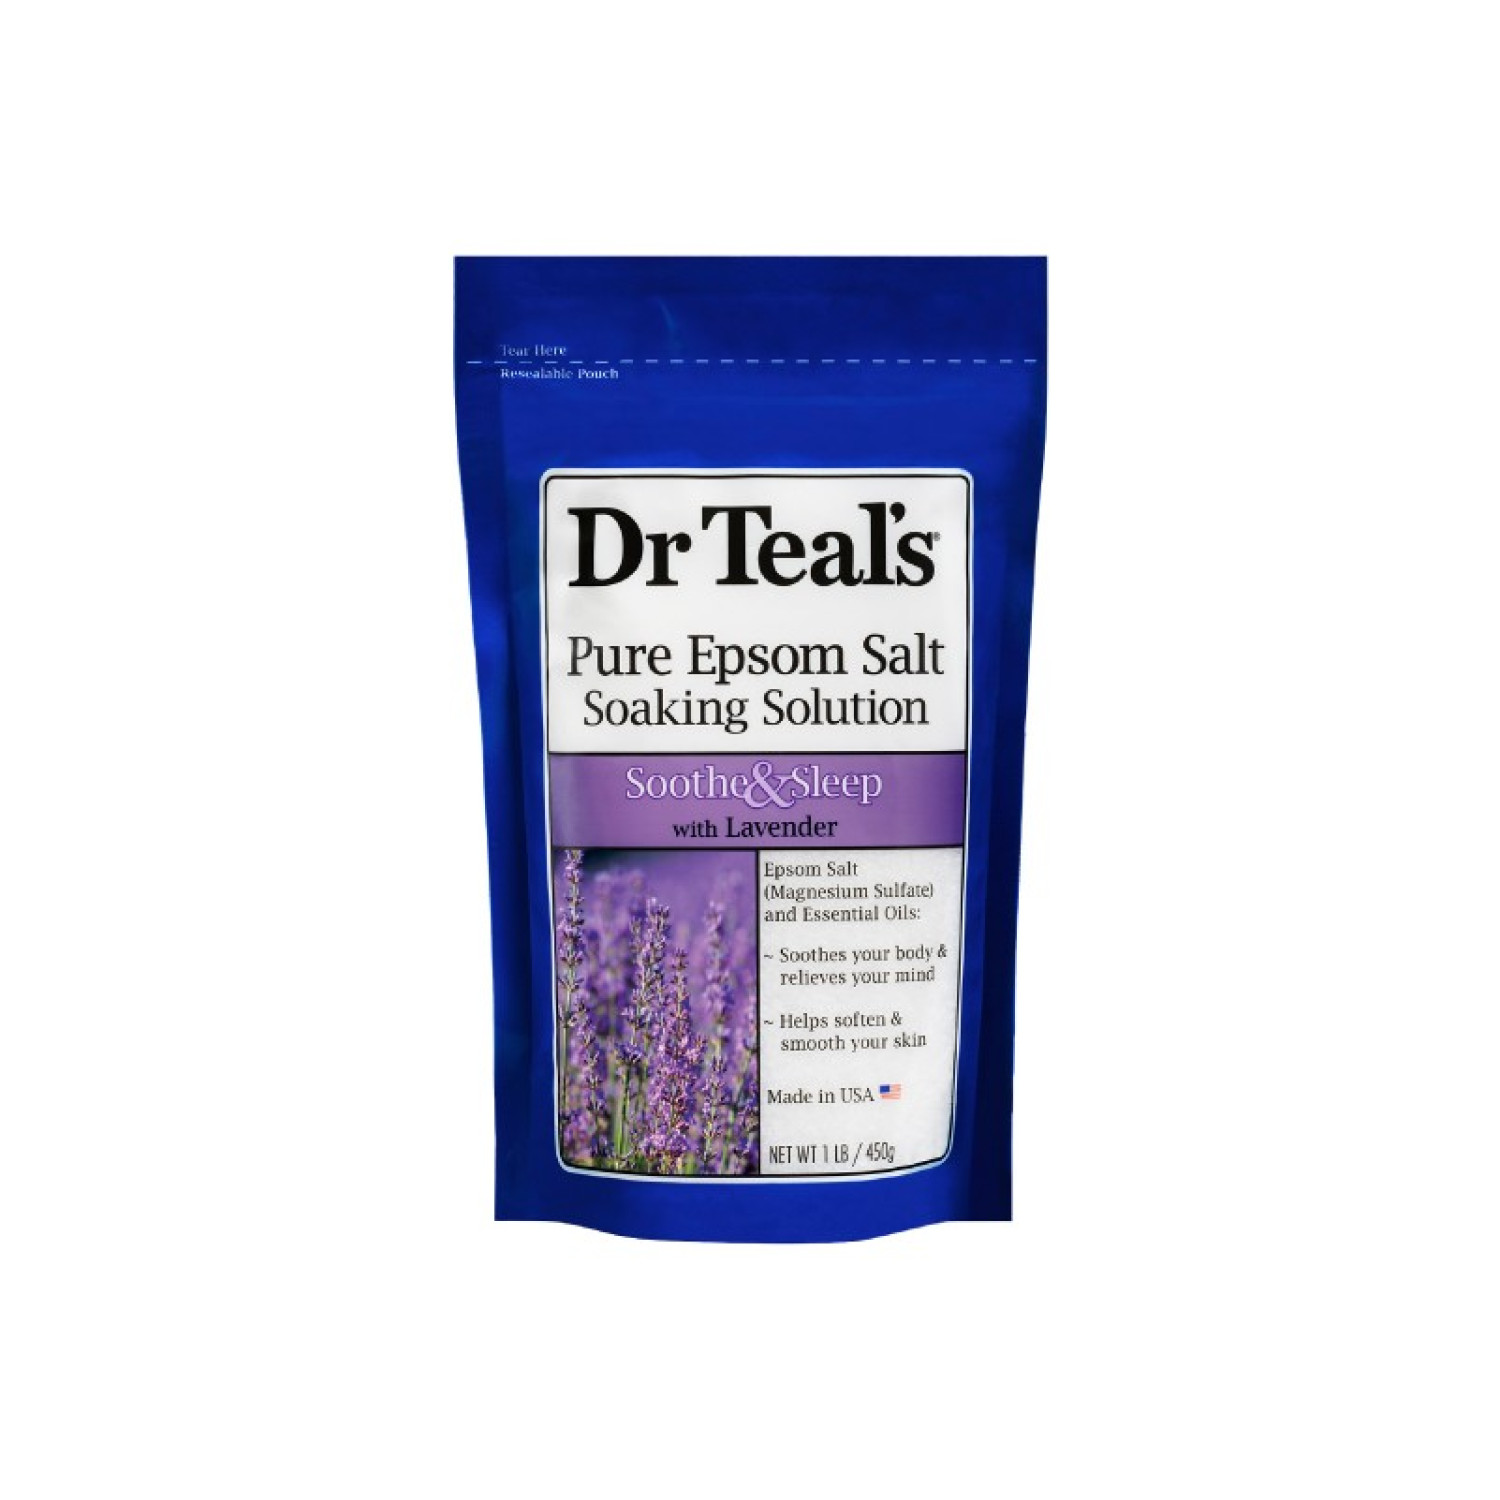 Dr Teal's Dr Teal’s Pure Epsom Salt Soaking Solution Calm & Sleep with Lavender